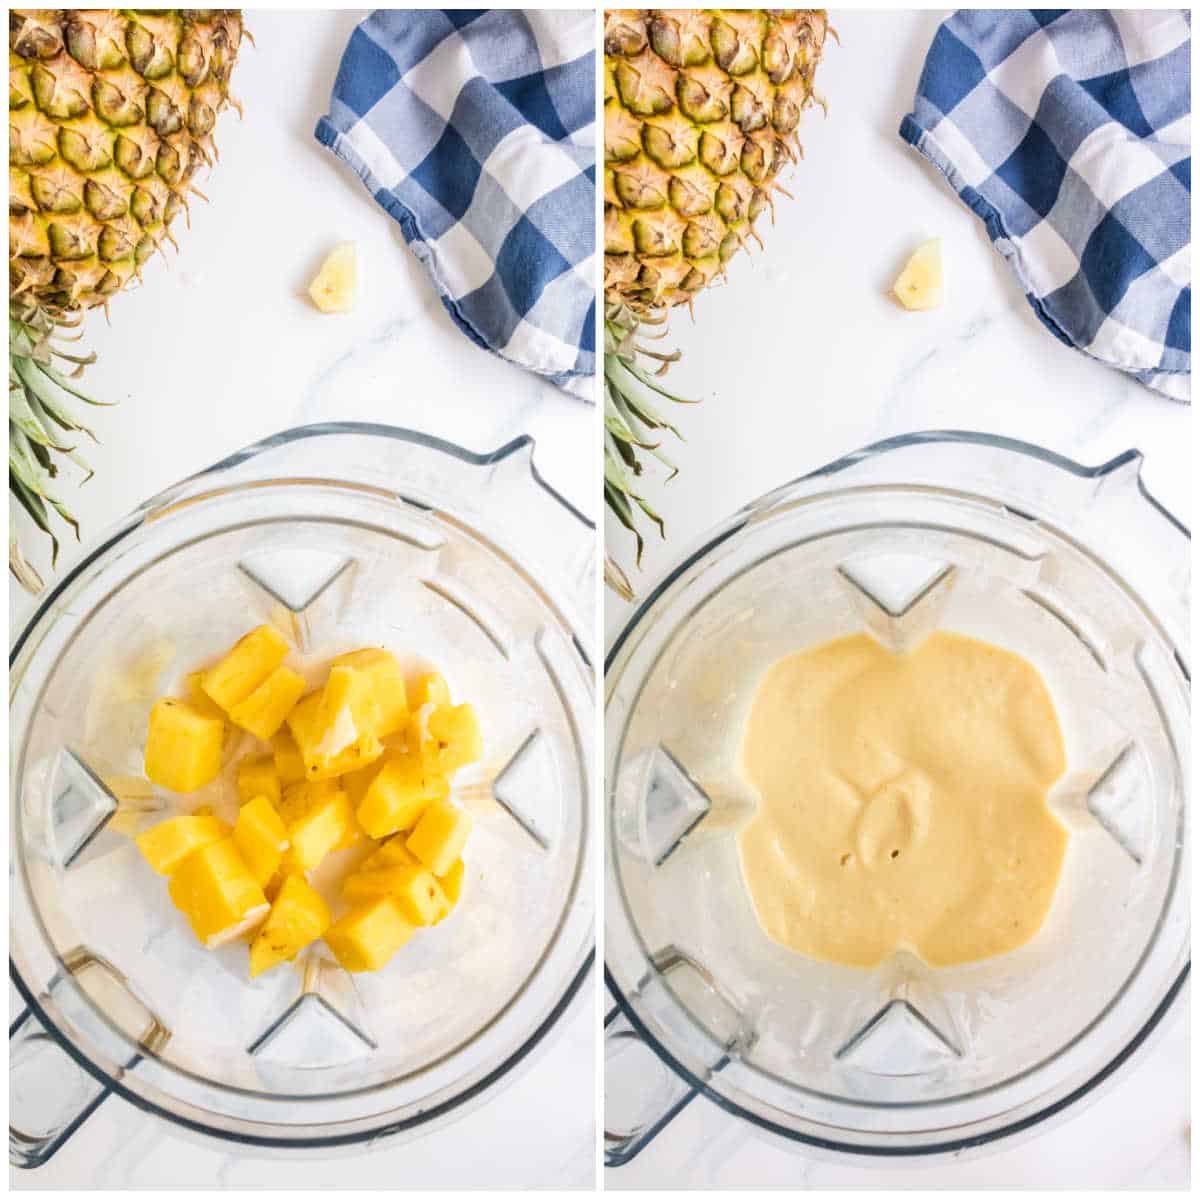 Steps to make pineapple ice cream.